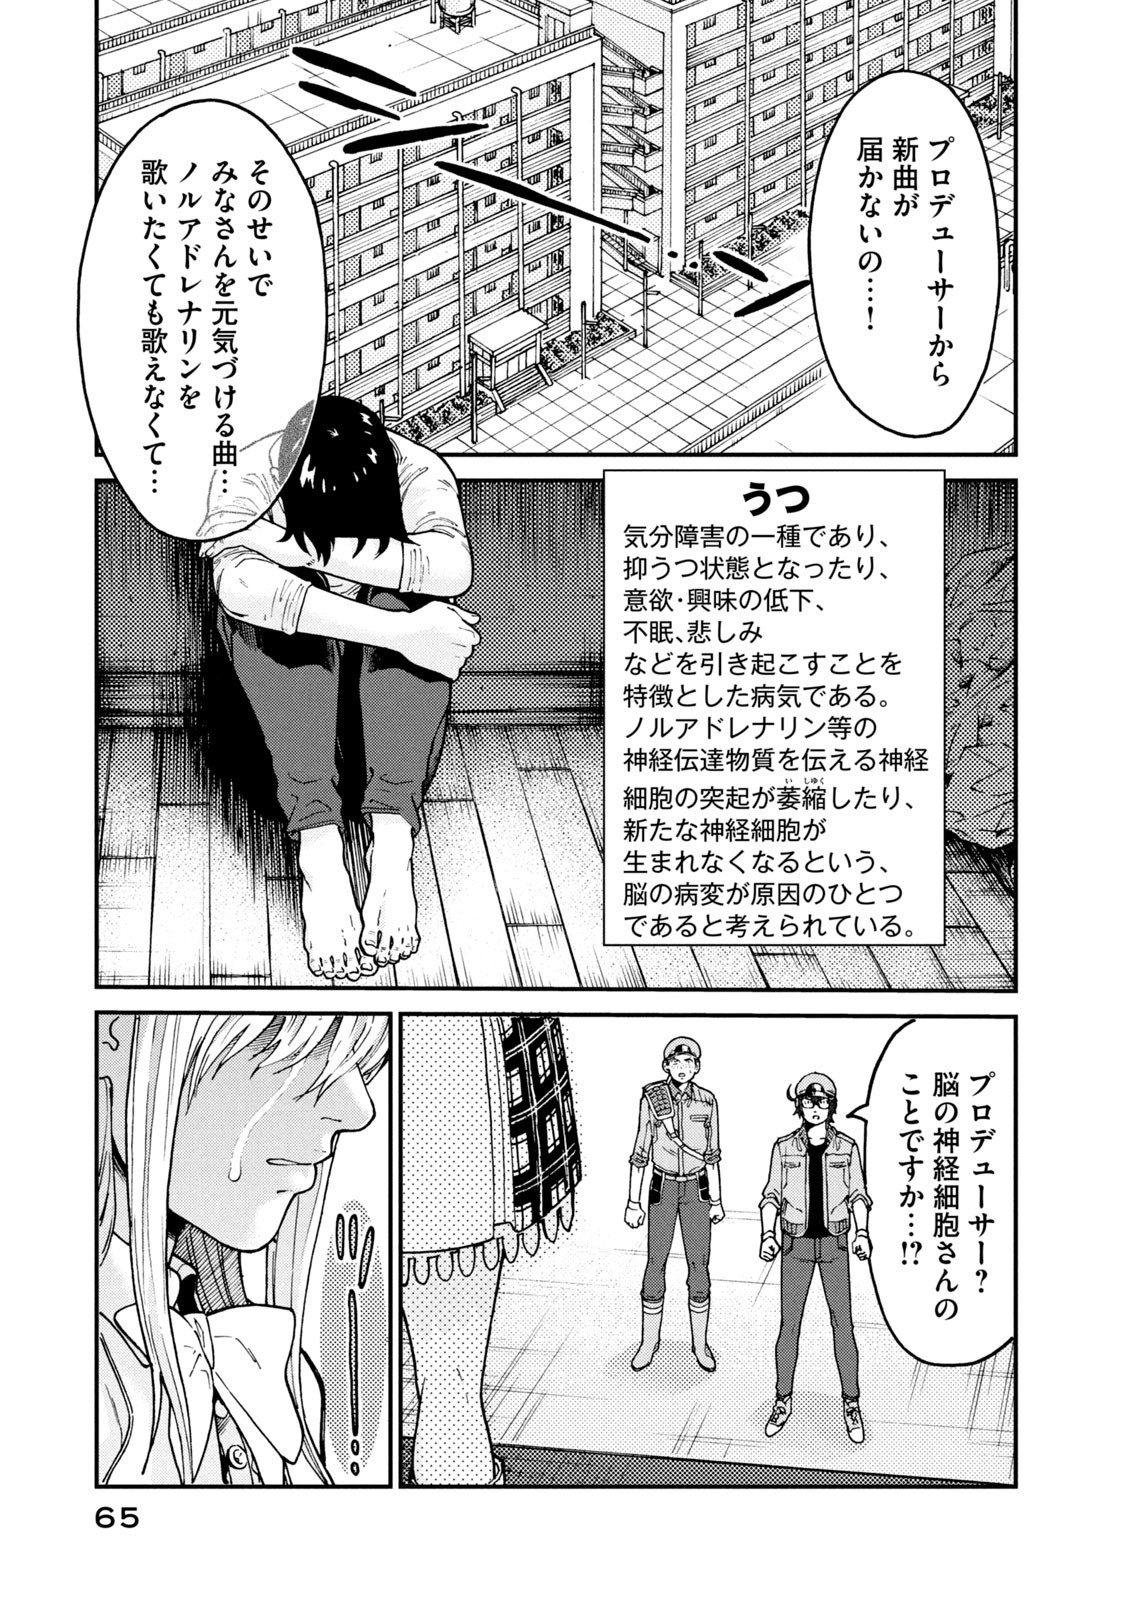 Hataraku Saibou BLACK - Chapter 34 - Page 3